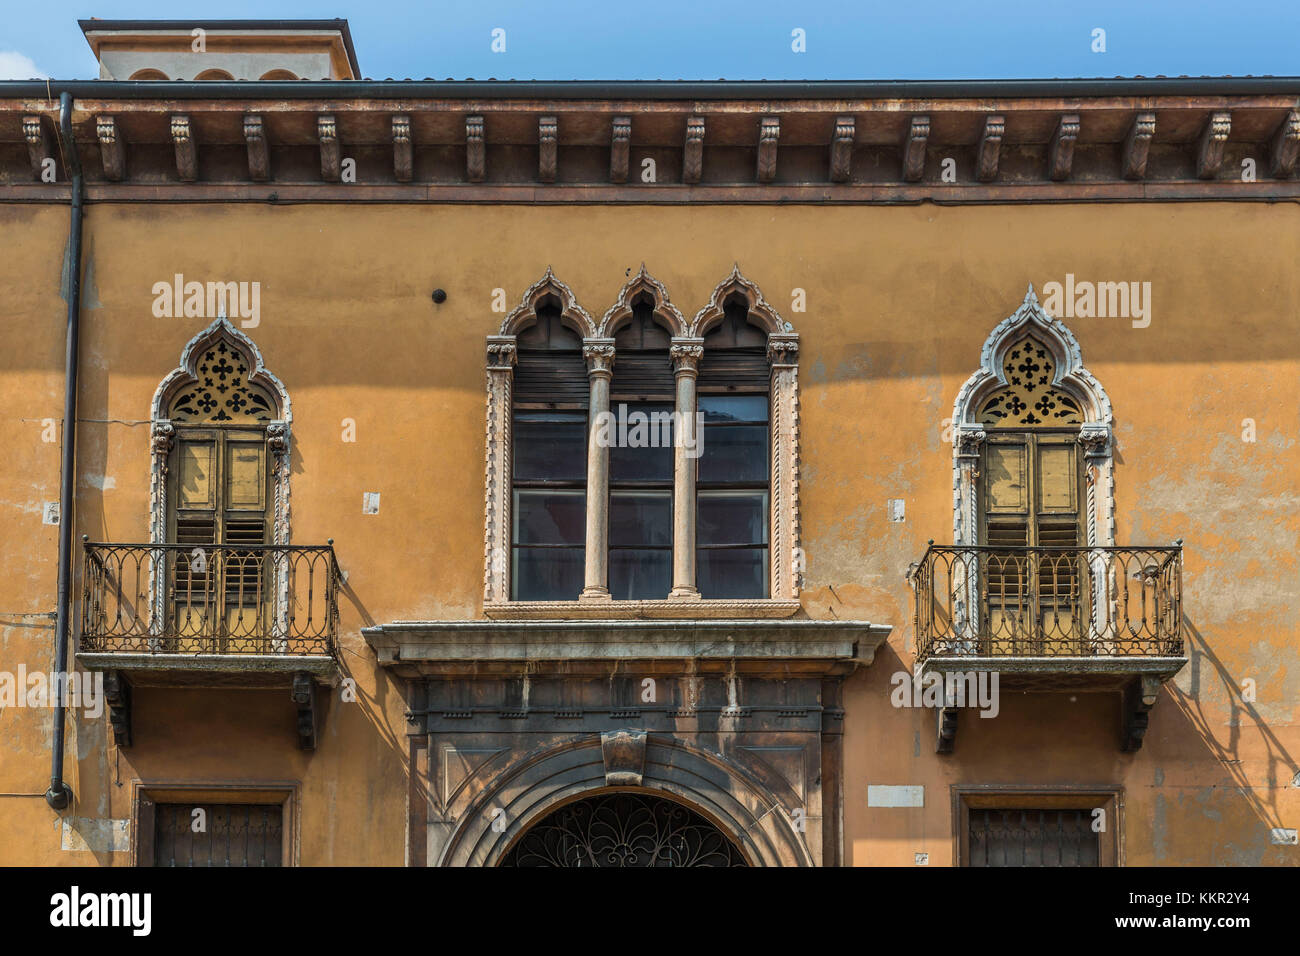 Palace Bottagisio, Renaissance architecture in the old town of Verona, via Leoni, Verona, Veneto, Italy, Europe Stock Photo